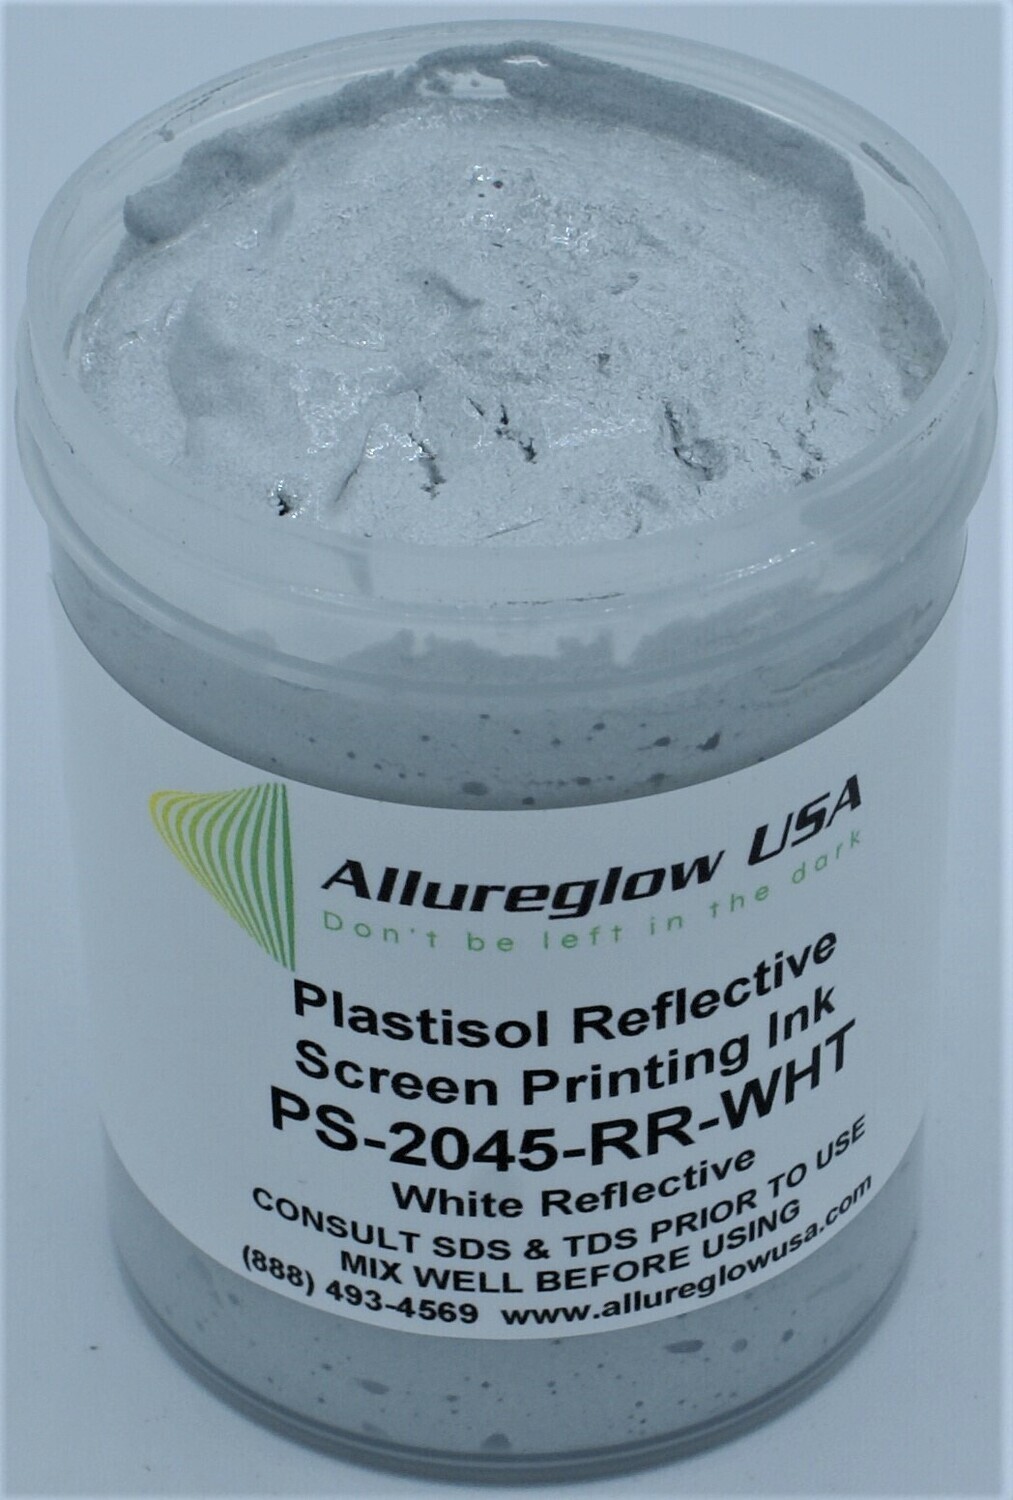 PS-2045-RR-WHT-GL  PLASTISOL WHITE REFLECTIVE INK GALLON